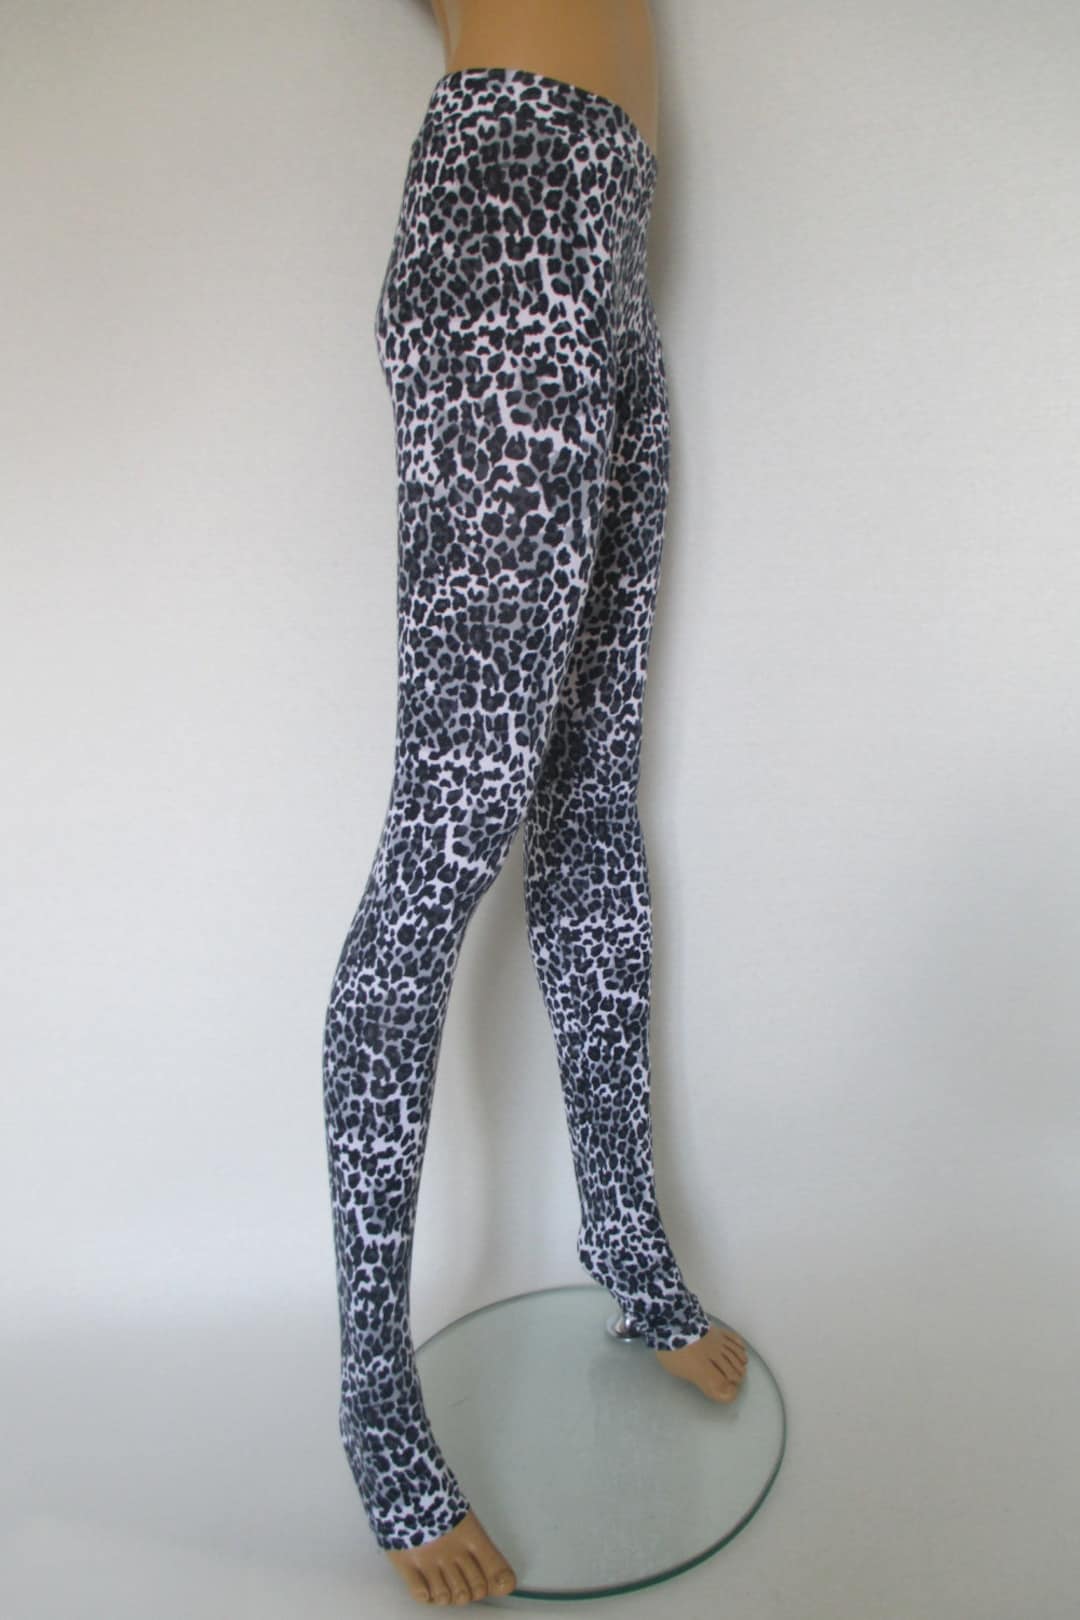 Cheetah Print Extra Long Yoga Pants Gym Leggings Tights Animal Print ...